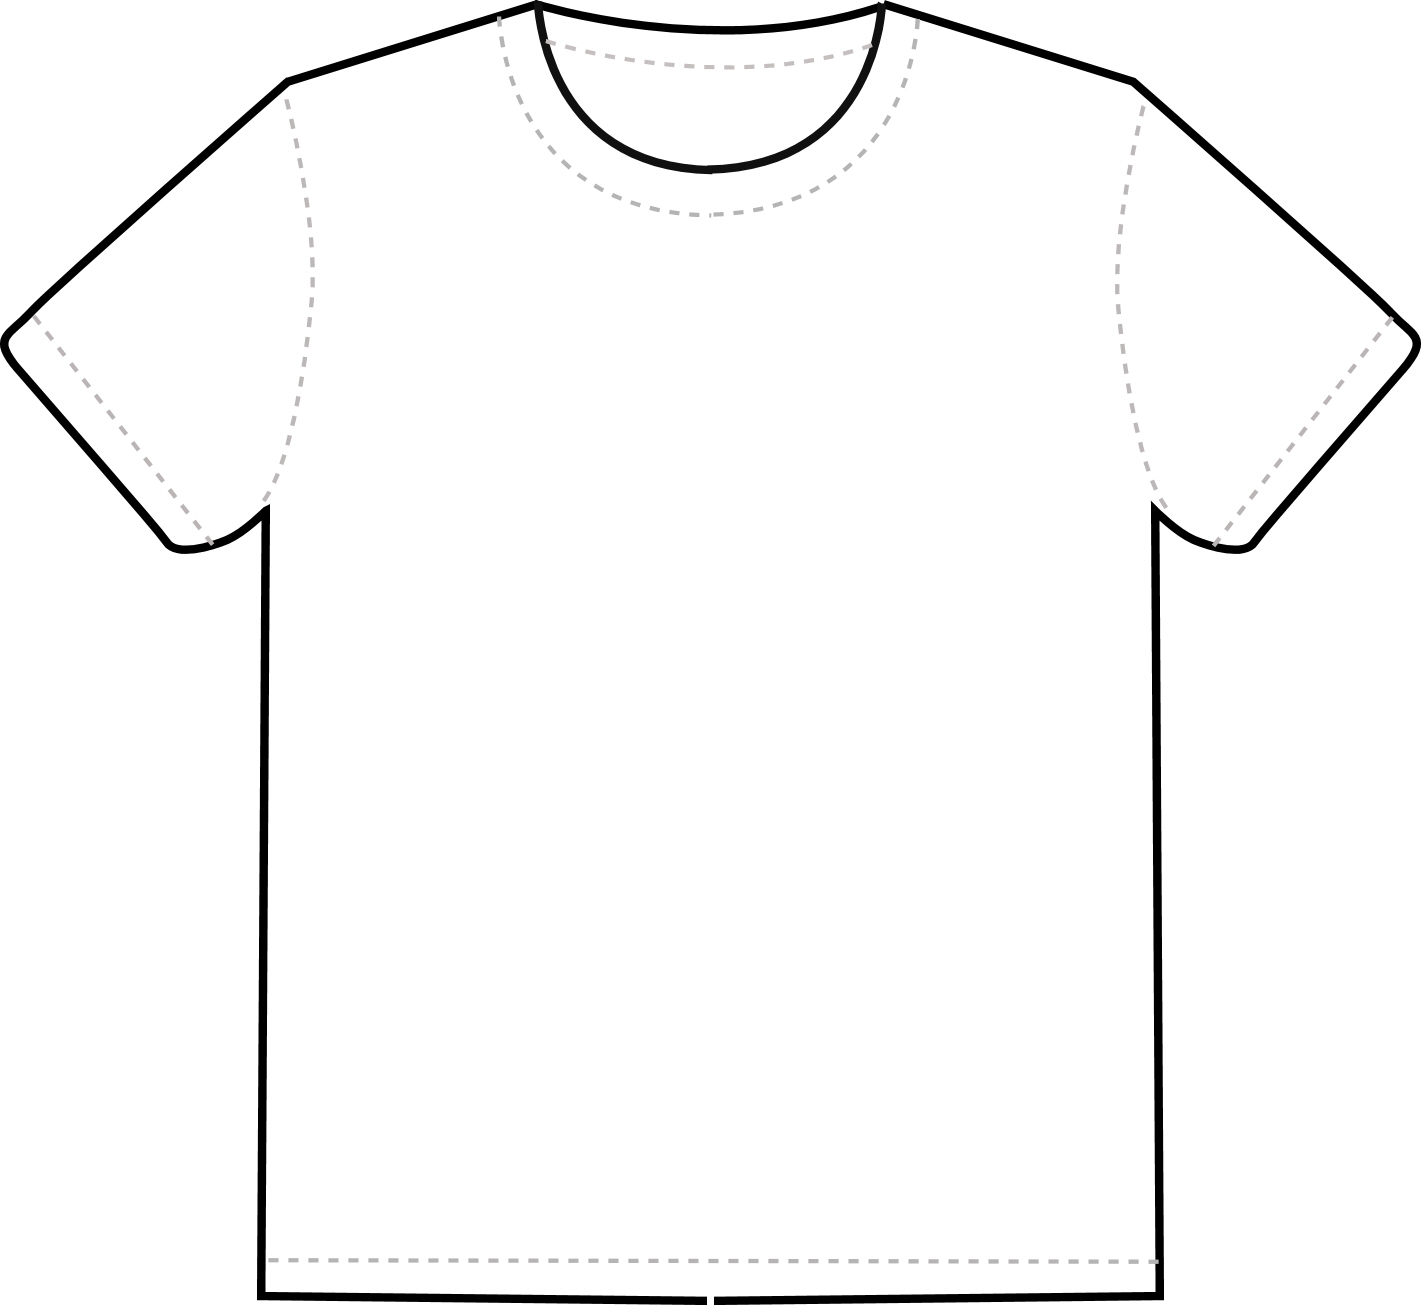 T-shirt Design Template - Clipart library